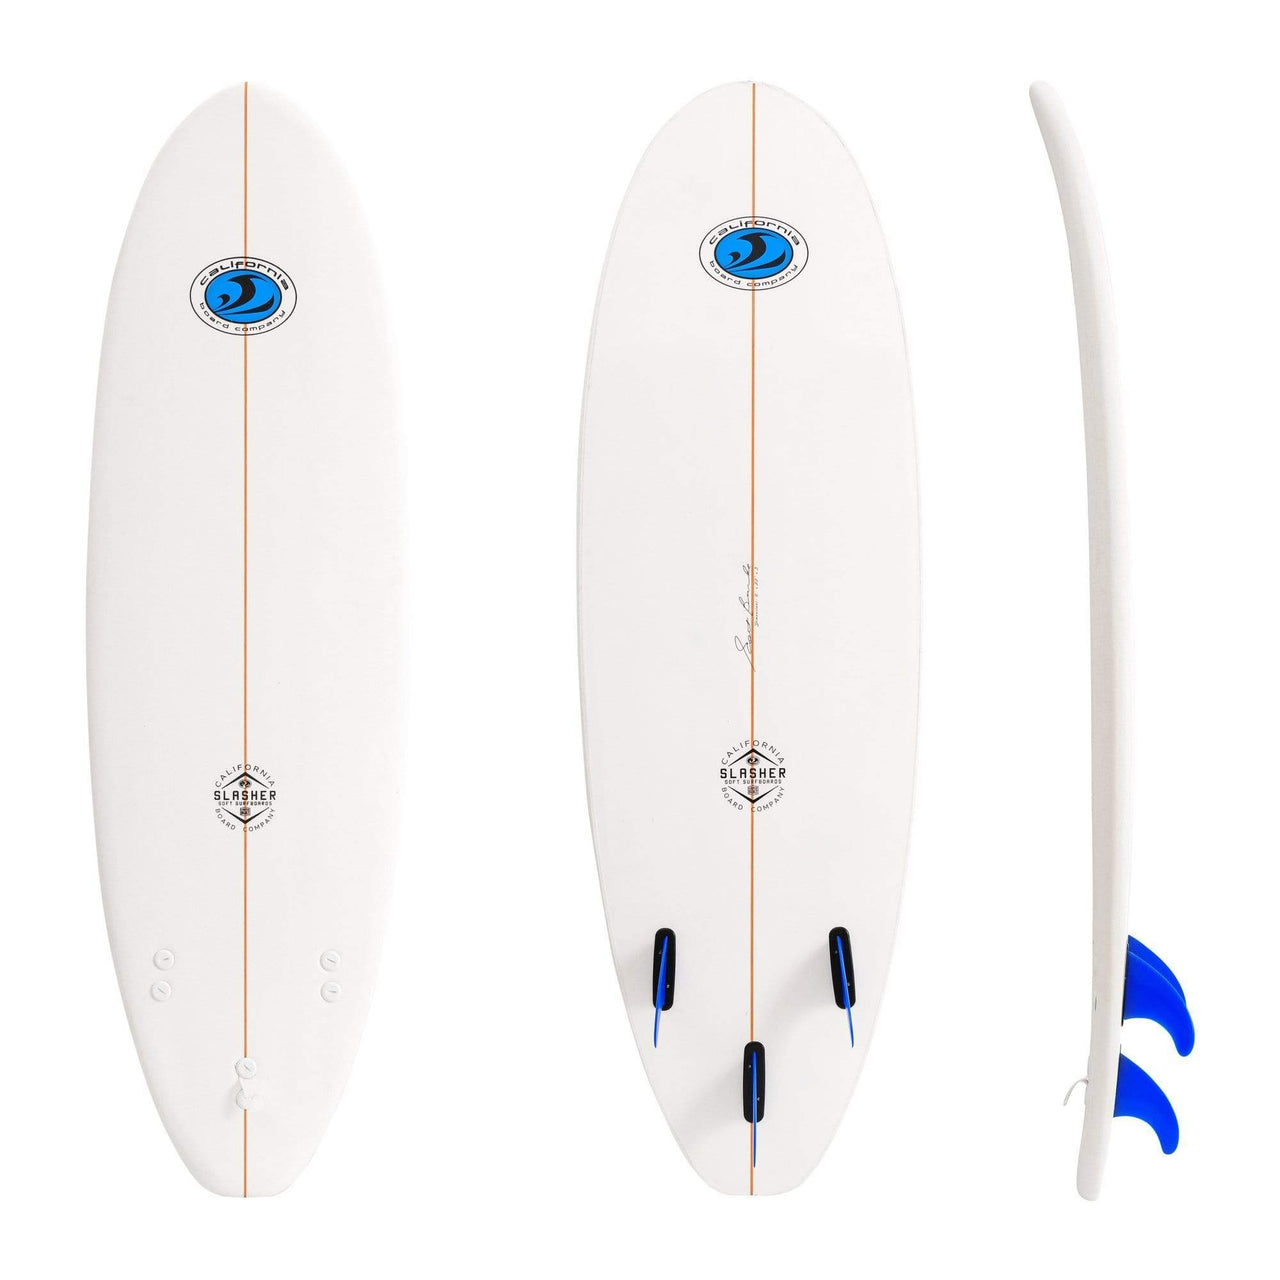 6' CBC Slasher Foam Surfboard - Good Wave